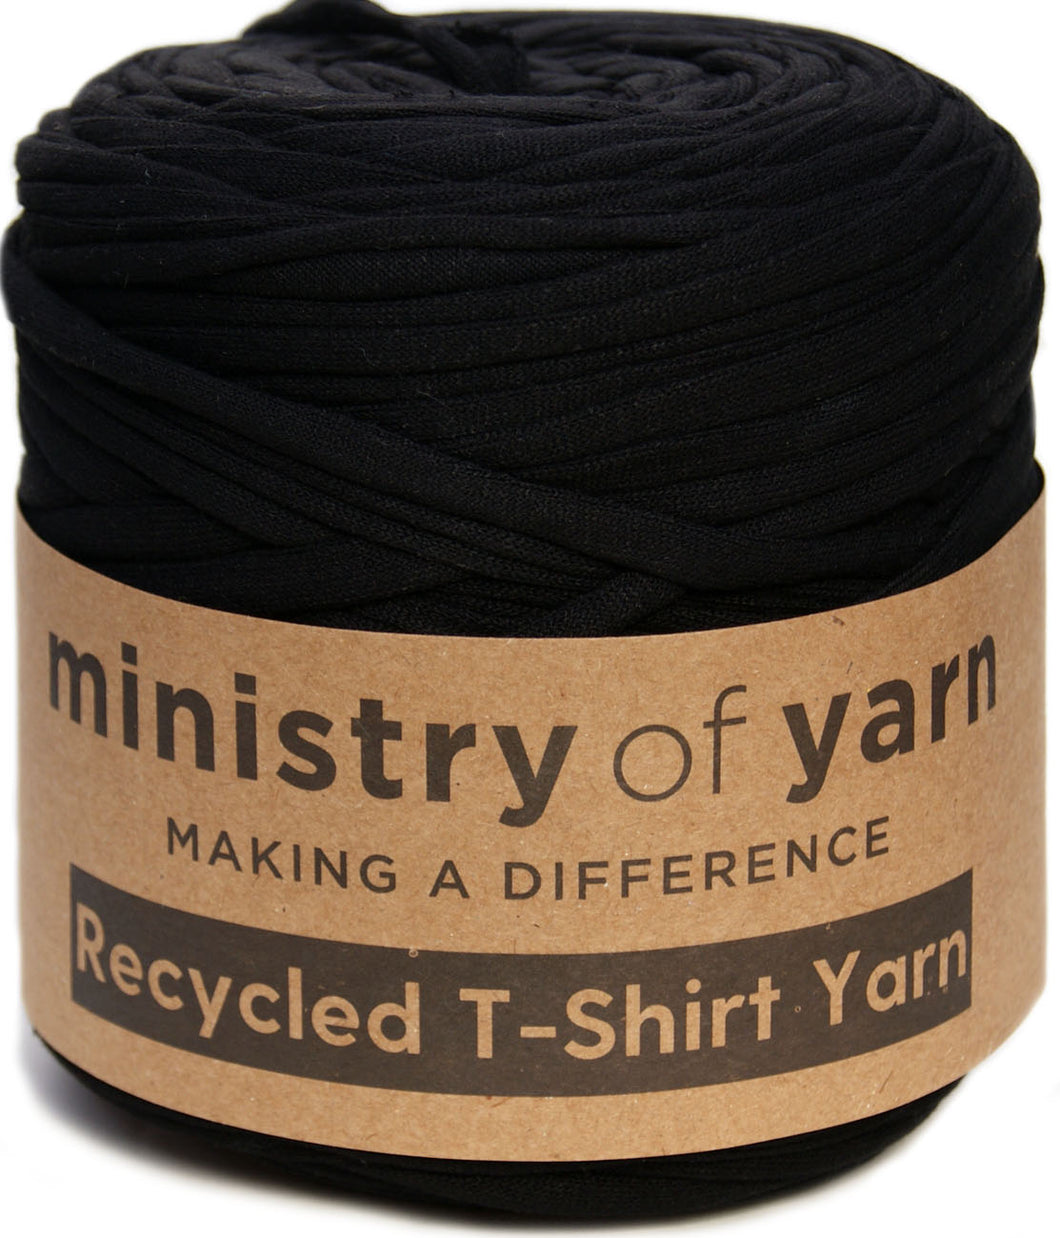 black recycled t-shirt yarn Australia